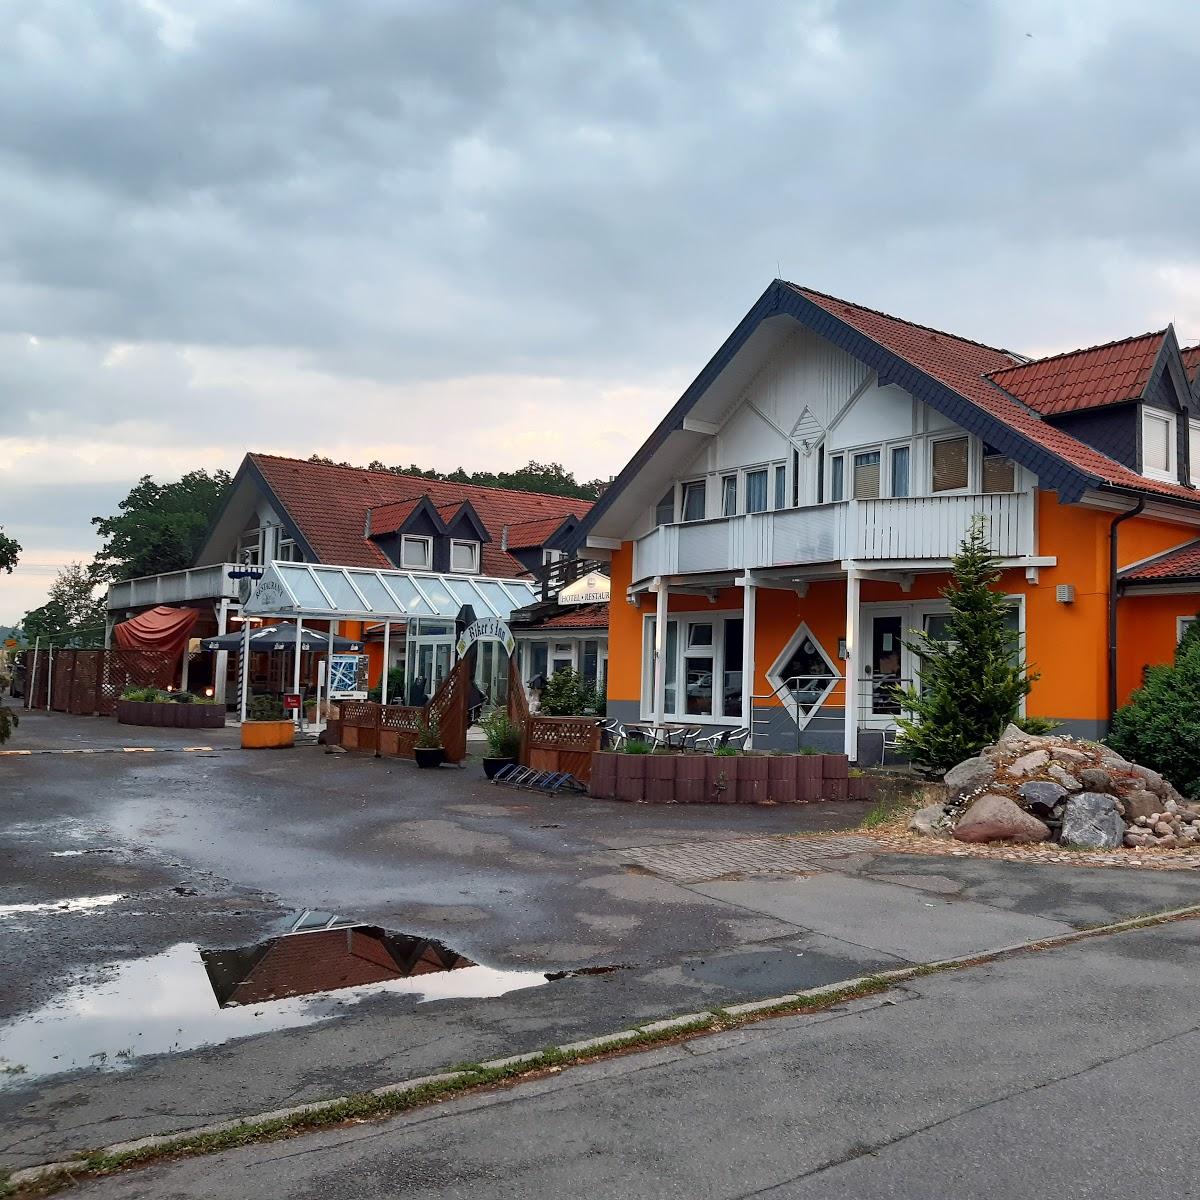 Restaurant "Hotel r Hof" in  Kuhfelde